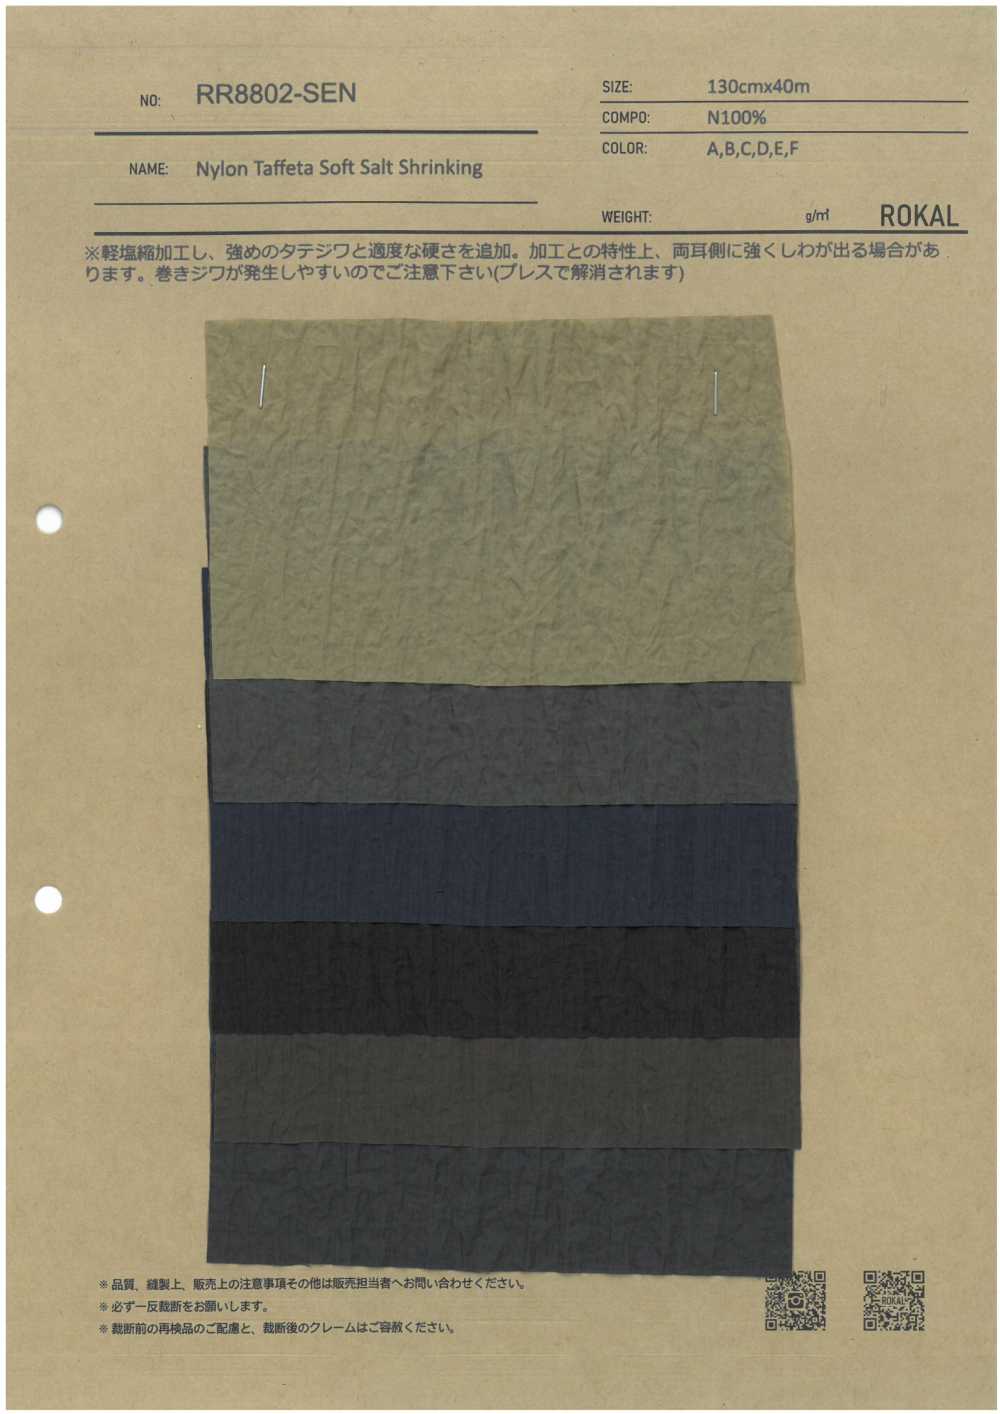 RR8802-SEN Nylon Taffeta Soft Salt Shrink[Textile / Fabric] Local